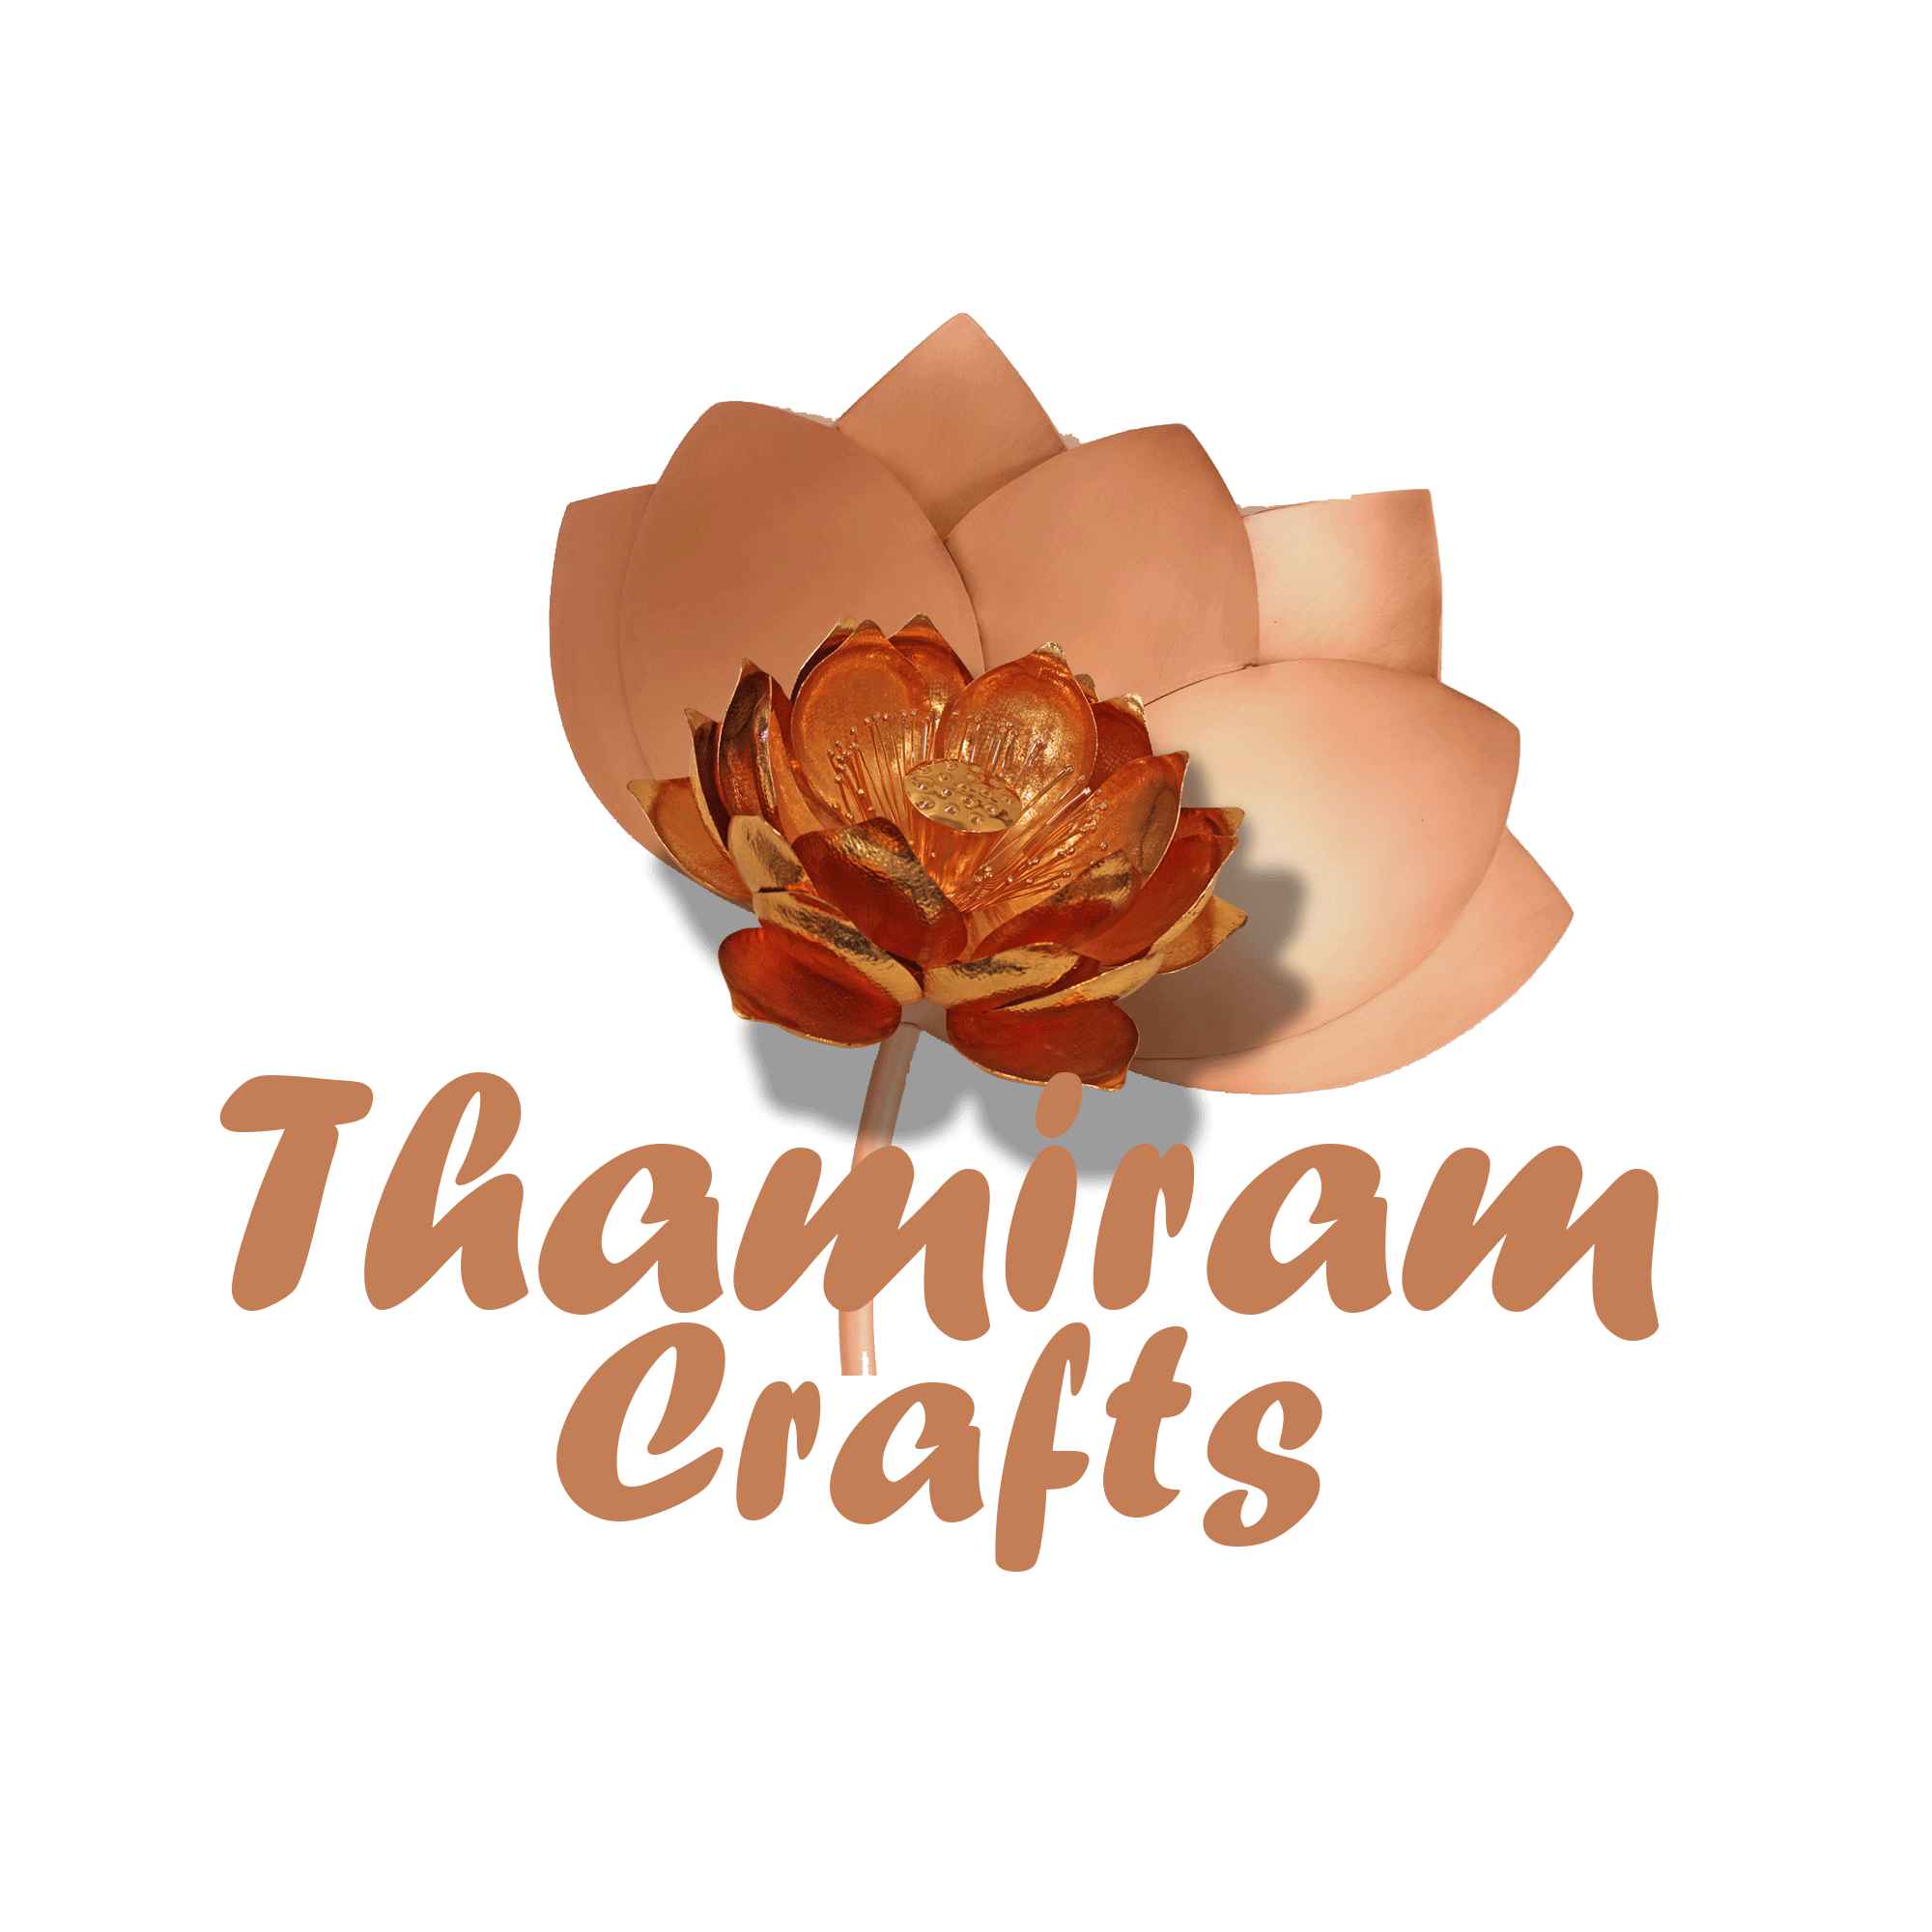 Thamiram crafts